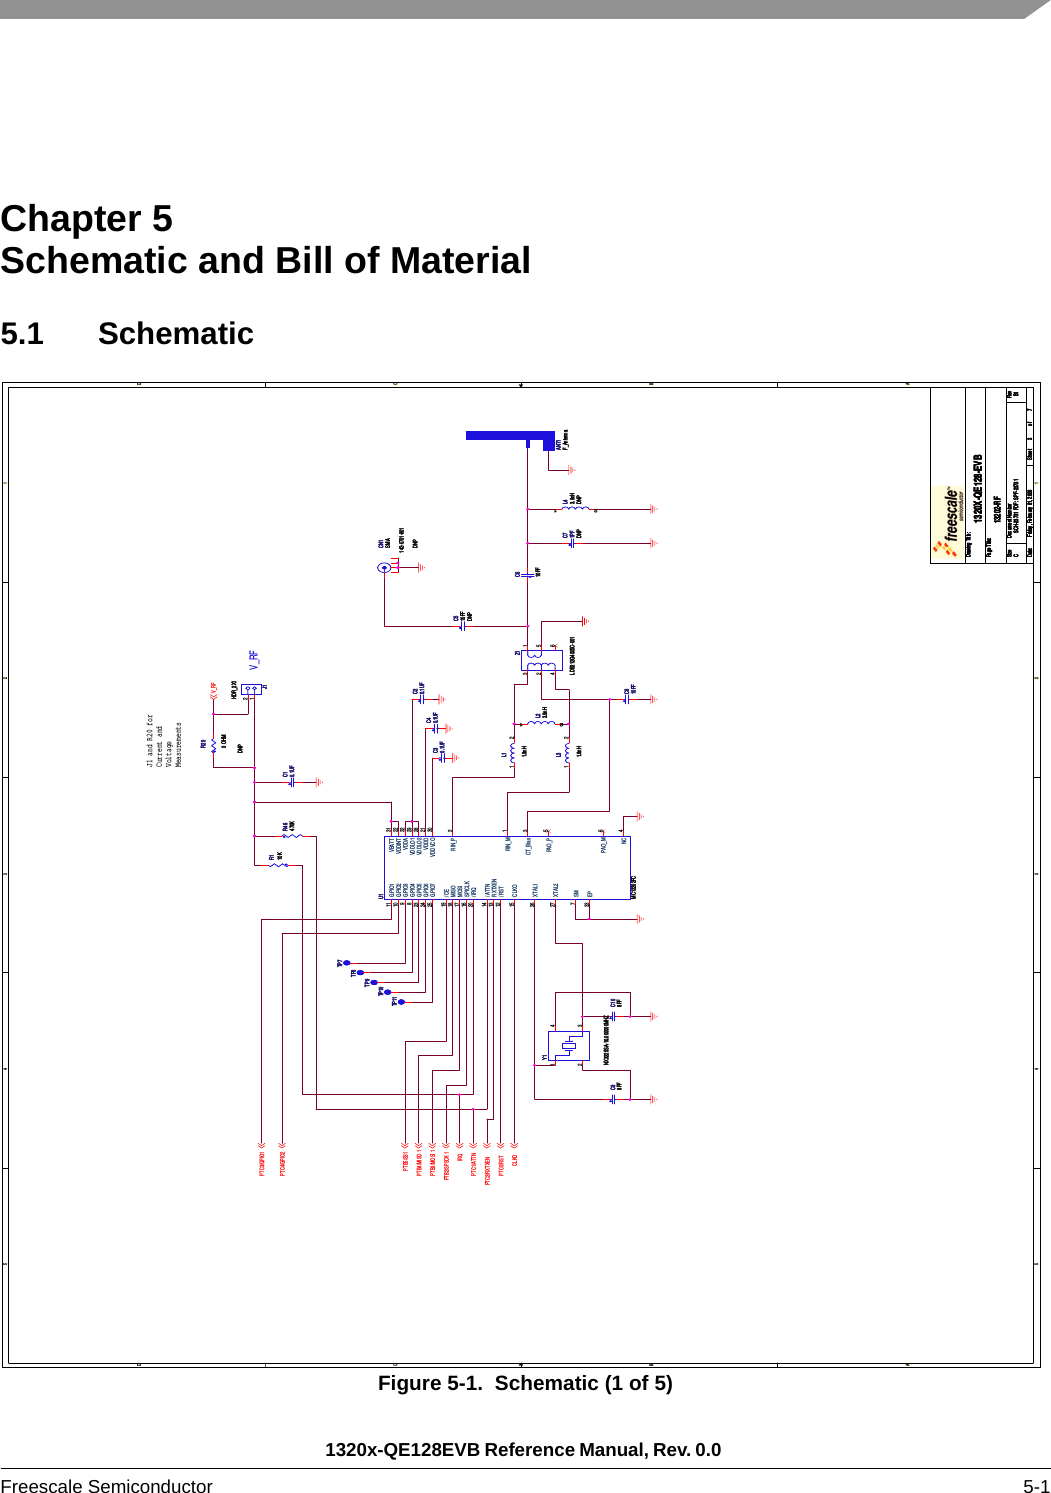 1320x-QE128EVB Reference Manual, Rev. 0.0 Freescale Semiconductor 5-1Chapter 5  Schematic and Bill of Material5.1 SchematicFigure 5-1.  Schematic (1 of 5)5544332211D DC CB BA AV_RFPTC3/GPIO1PTC4/GPIO2PTB5/SS1PTB4/MISO 1PTB3/MOSI 1PTB2/SPSCK 1IRQPTC1/ATTNPTC2/RXTXENPTC0/RSTCLKODrawing Title:Size Document Number RevDate: Sheet ofPage Title:SCH-23731 PDF: SPF-23731 B11320X-QE128-EVBCFriday, February 01, 200813202-RF37Drawing Title:Size Document Number RevDate: Sheet ofPage Title:SCH-23731 PDF: SPF-23731 B11320X-QE128-EVBCFriday, February 01, 200813202-RF37Drawing Title:Size Document Number RevDate: Sheet ofPage Title:SCH-23731 PDF: SPF-23731 B11320X-QE128-EVBCFriday, February 01, 200813202-RF37V_RFJ1 and R20 forCurrent andVoltageMeasurementsR200 OHMDNPR200 OHMDNPANT1F_AntennaANT1F_AntennaU1MC13202FCU1MC13202FC/ATTN14/CE19CLKO15GPIO111GPIO210GPIO39GPIO48GPIO725GPIO523GPIO624/IRQ20MISO18MOSI17PAO_M 6PAO_P 5RIN_M 1RIN_P 2/RST12 RXTXEN13SM7SPICLK16NC 4CT_Bias 3XTAL126XTAL227VBATT 31VDDA 32VDDD 21VDDINT 22VDDLO1 29VDDLO2 28VDDVCO 30EP33C30.1UFC30.1UFTP8TP8C40.1UFC40.1UFL43.9nHDNPL43.9nHDNP12L31.8nHL31.8nH1 2R110KR110KC610PFC610PFC20.1UFC20.1UFTP9TP9L11.8nHL11.8nH1 2CN1SMA142-0701-801DNPCN1SMA142-0701-801DNPC108PFC108PFC10.1UFC10.1UFY1NX3225SA-16.000000MHZY1NX3225SA-16.000000MHZ1 432C98PFC98PFTP10TP10J1HDR_2X1J1HDR_2X112L23.9nHL23.9nH12C810PFC810PFZ1LDB212G4005C-001Z1LDB212G4005C-001516234C510PFDNPC510PFDNPR46470KR46470KTP11TP11C71PFDNPC71PFDNPTP7TP7